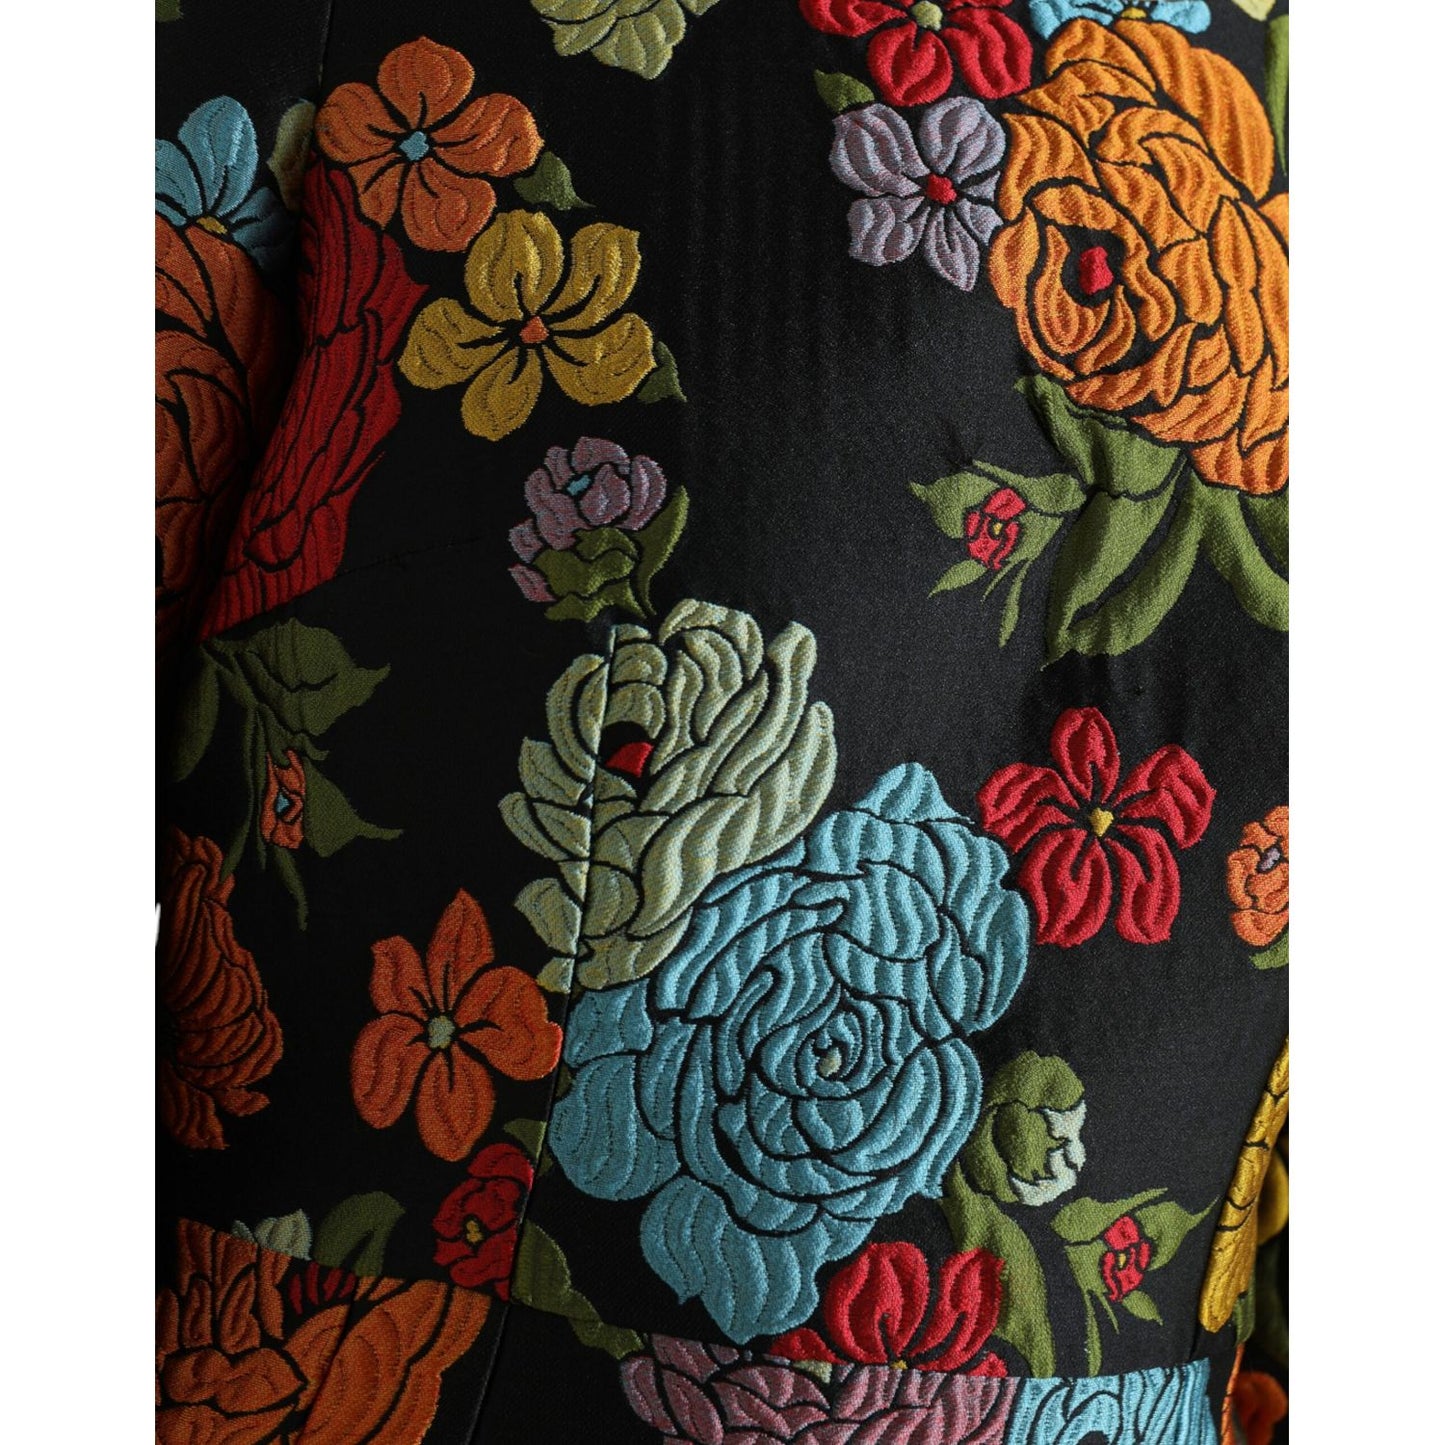 Dolce & Gabbana Elegant Floral Embroidered Pencil Dress black-floral-embroidery-knee-length-dress